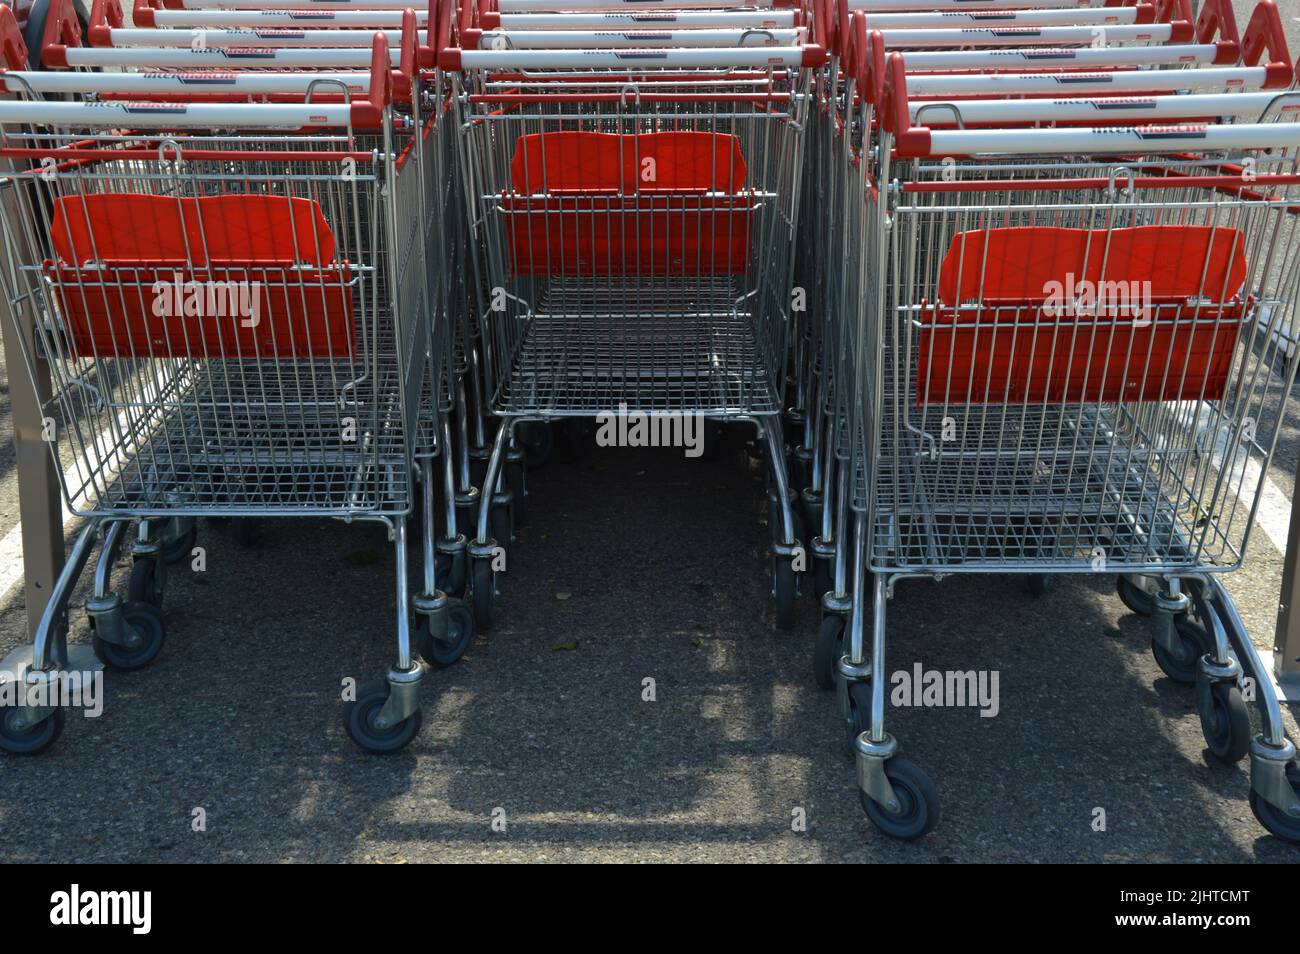 Closeup shot on Shopping carts Stock Photo